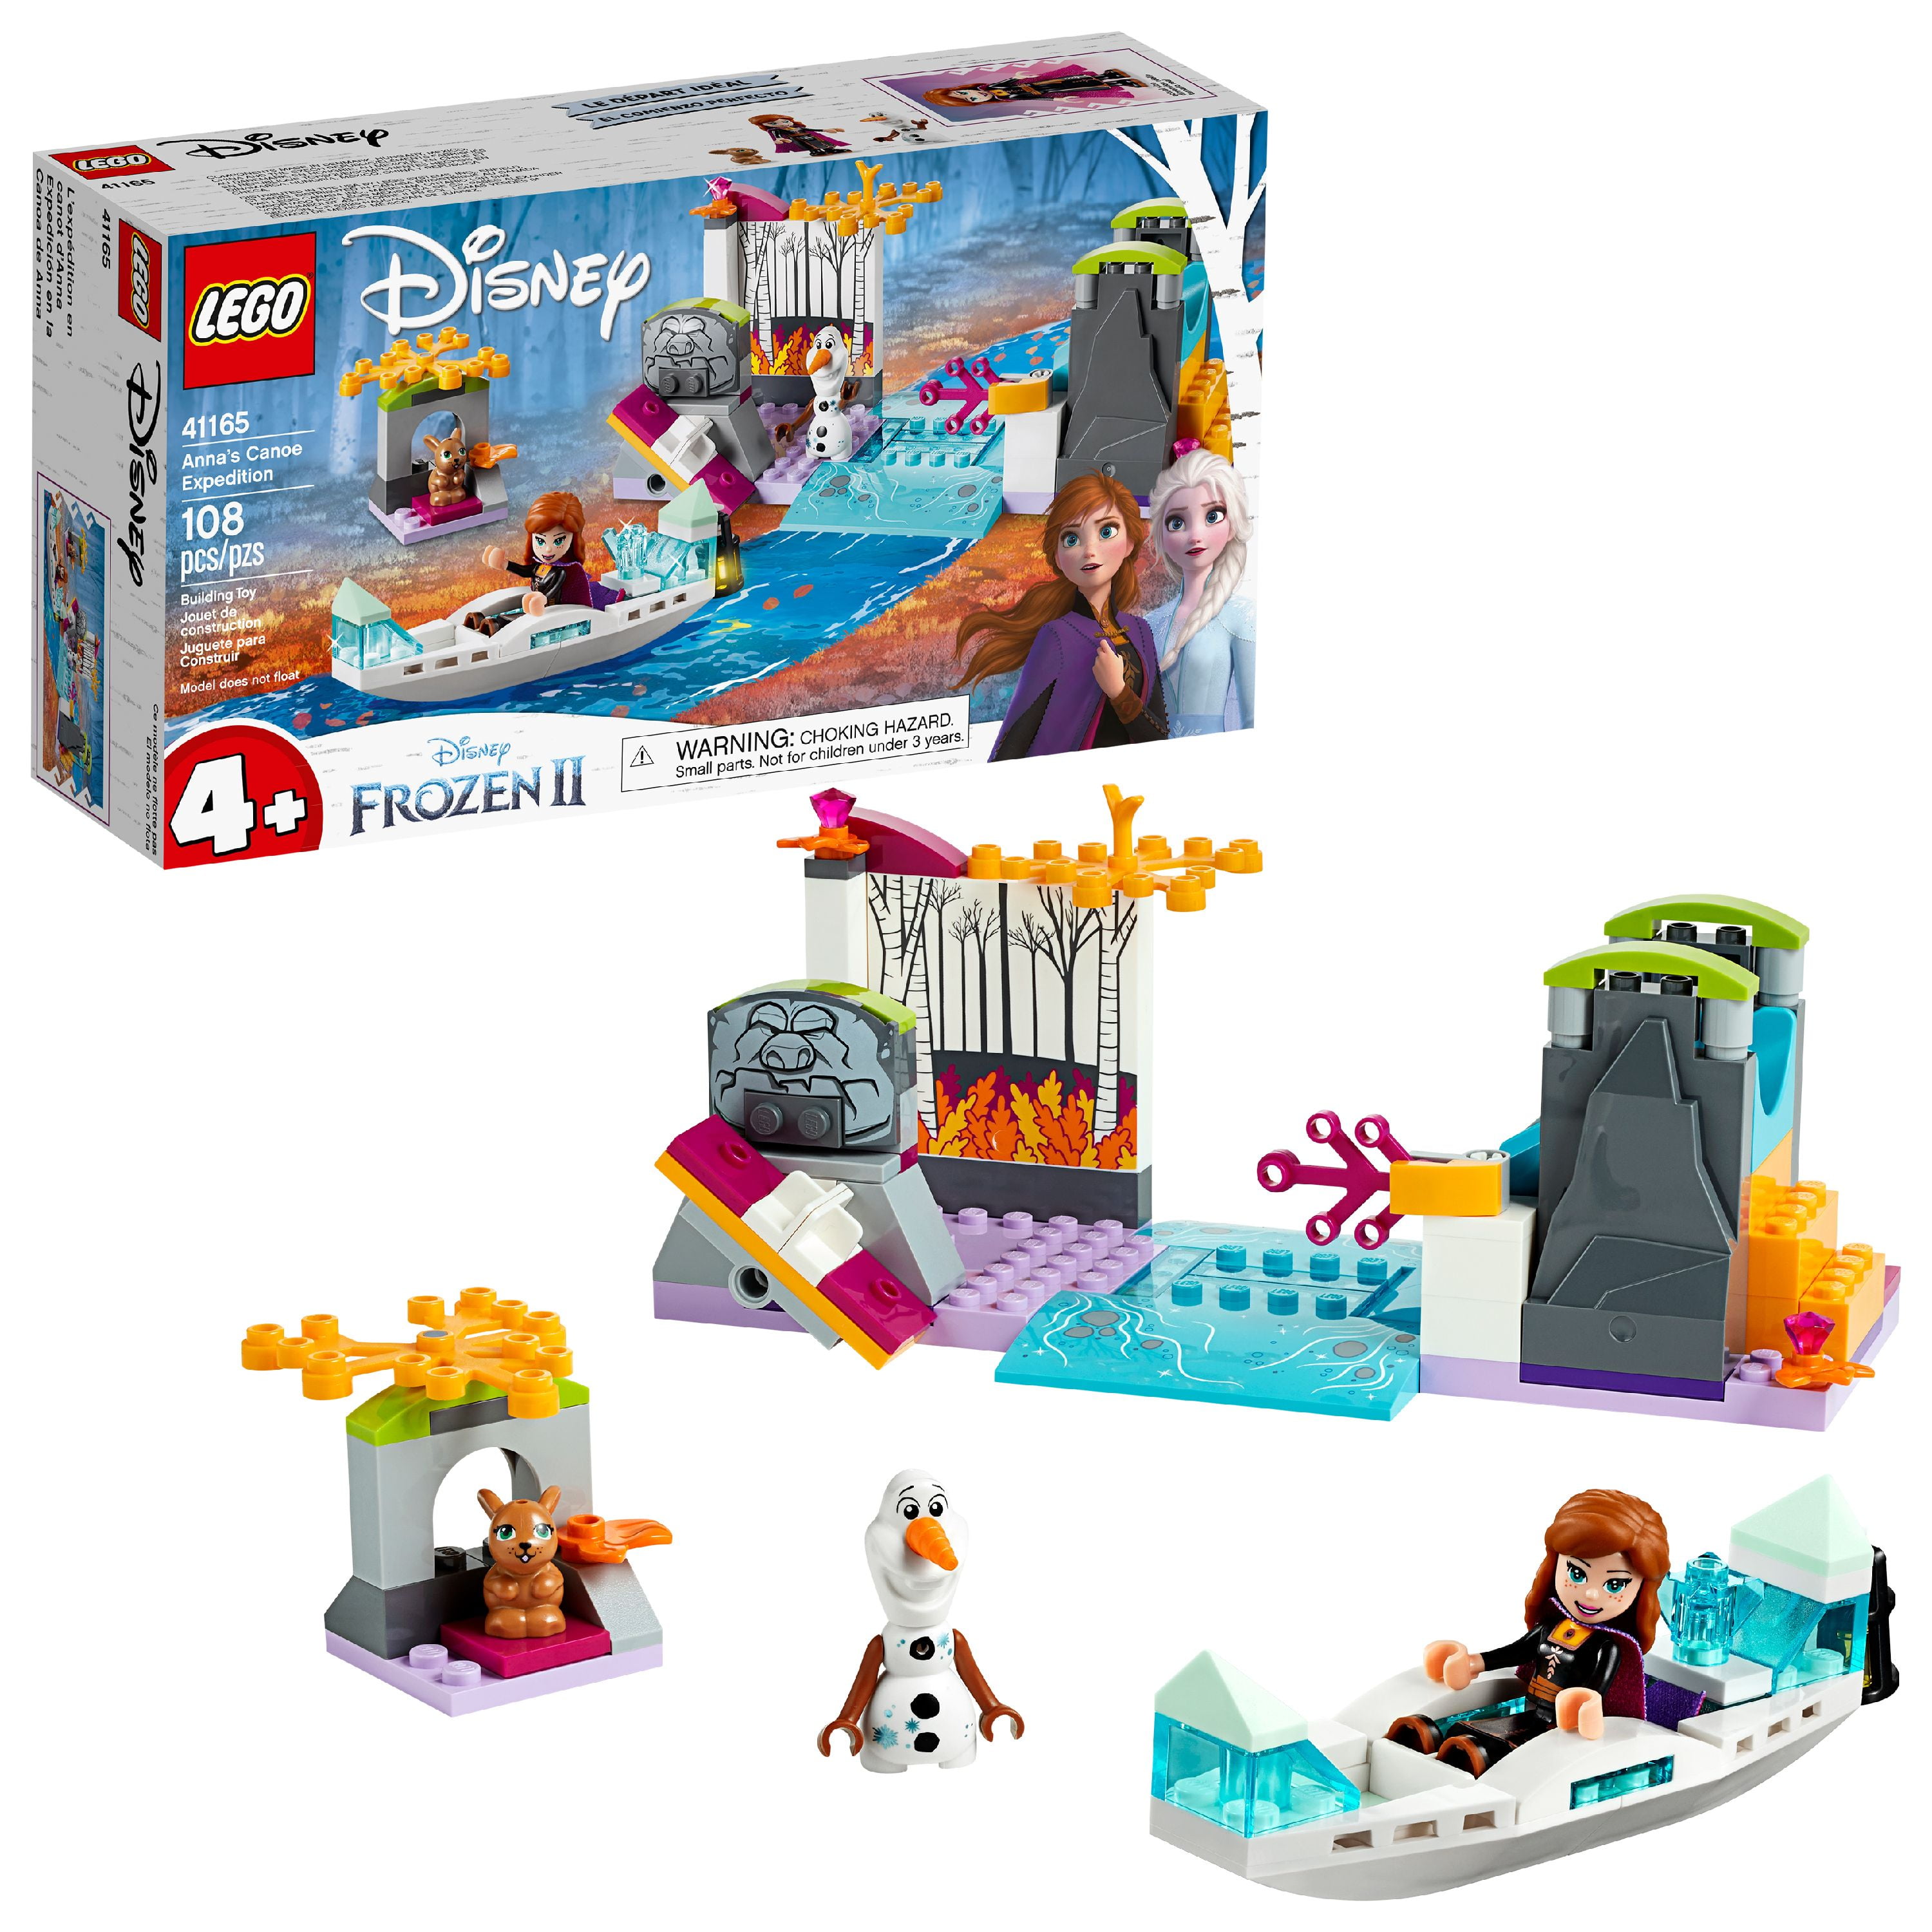 New & Sealed 30553 LEGO DISNEY Frozen 2 ELSA'S WINTER THRONE 